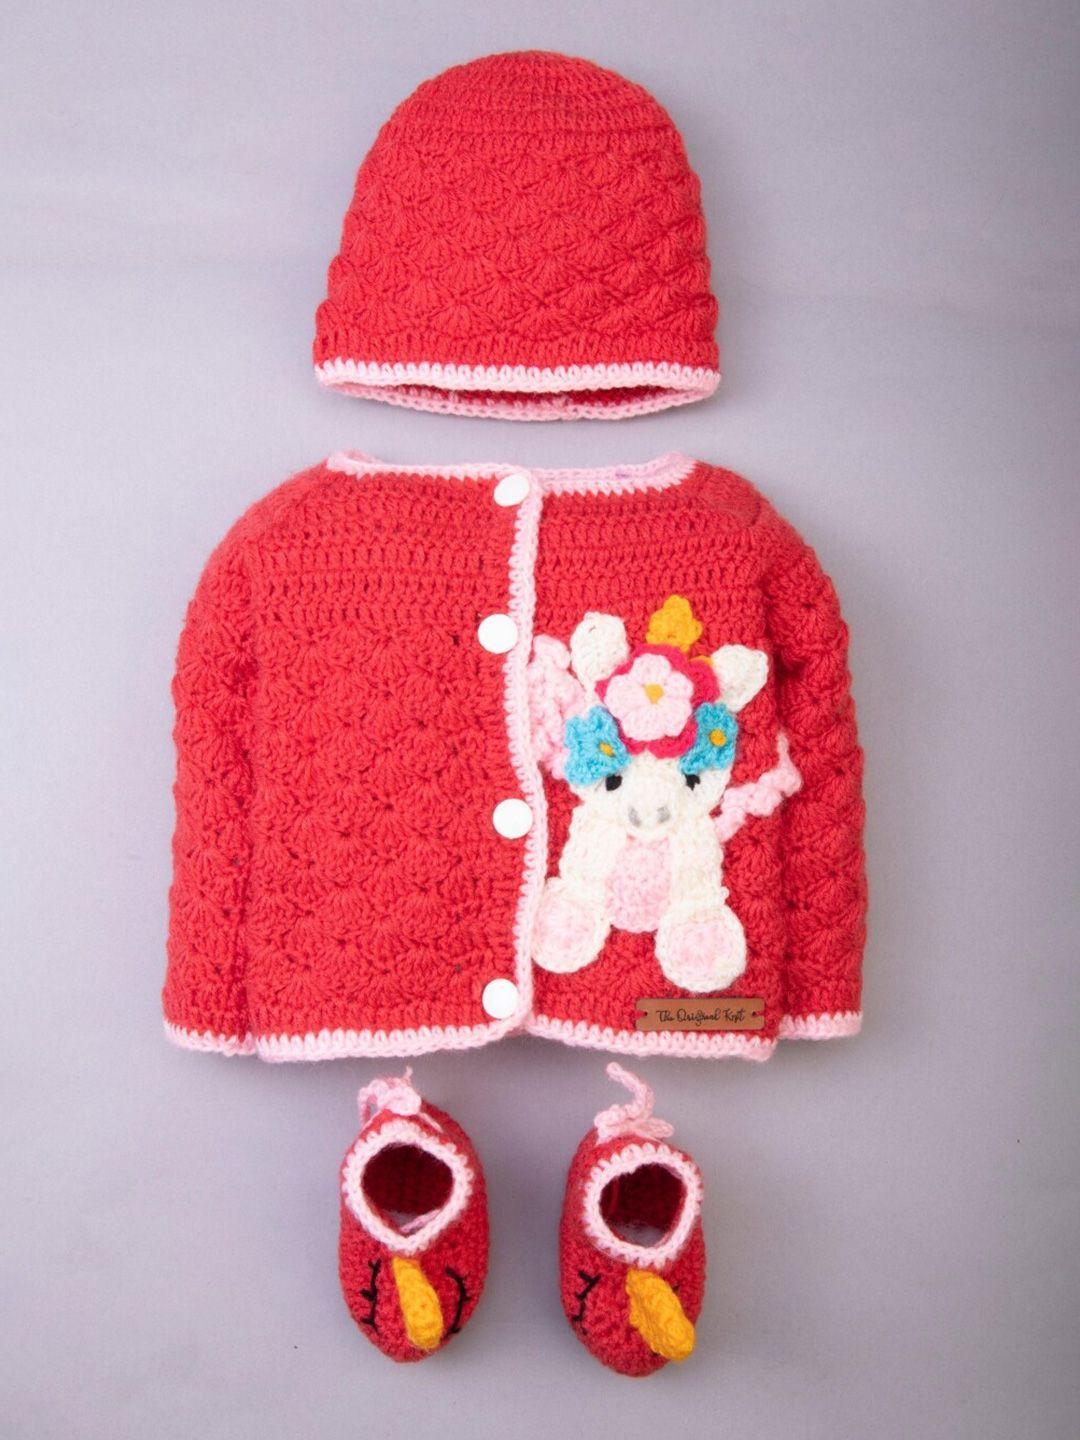 the original knit unisex kids red & white cardigan cap, sock & mittens sweater set